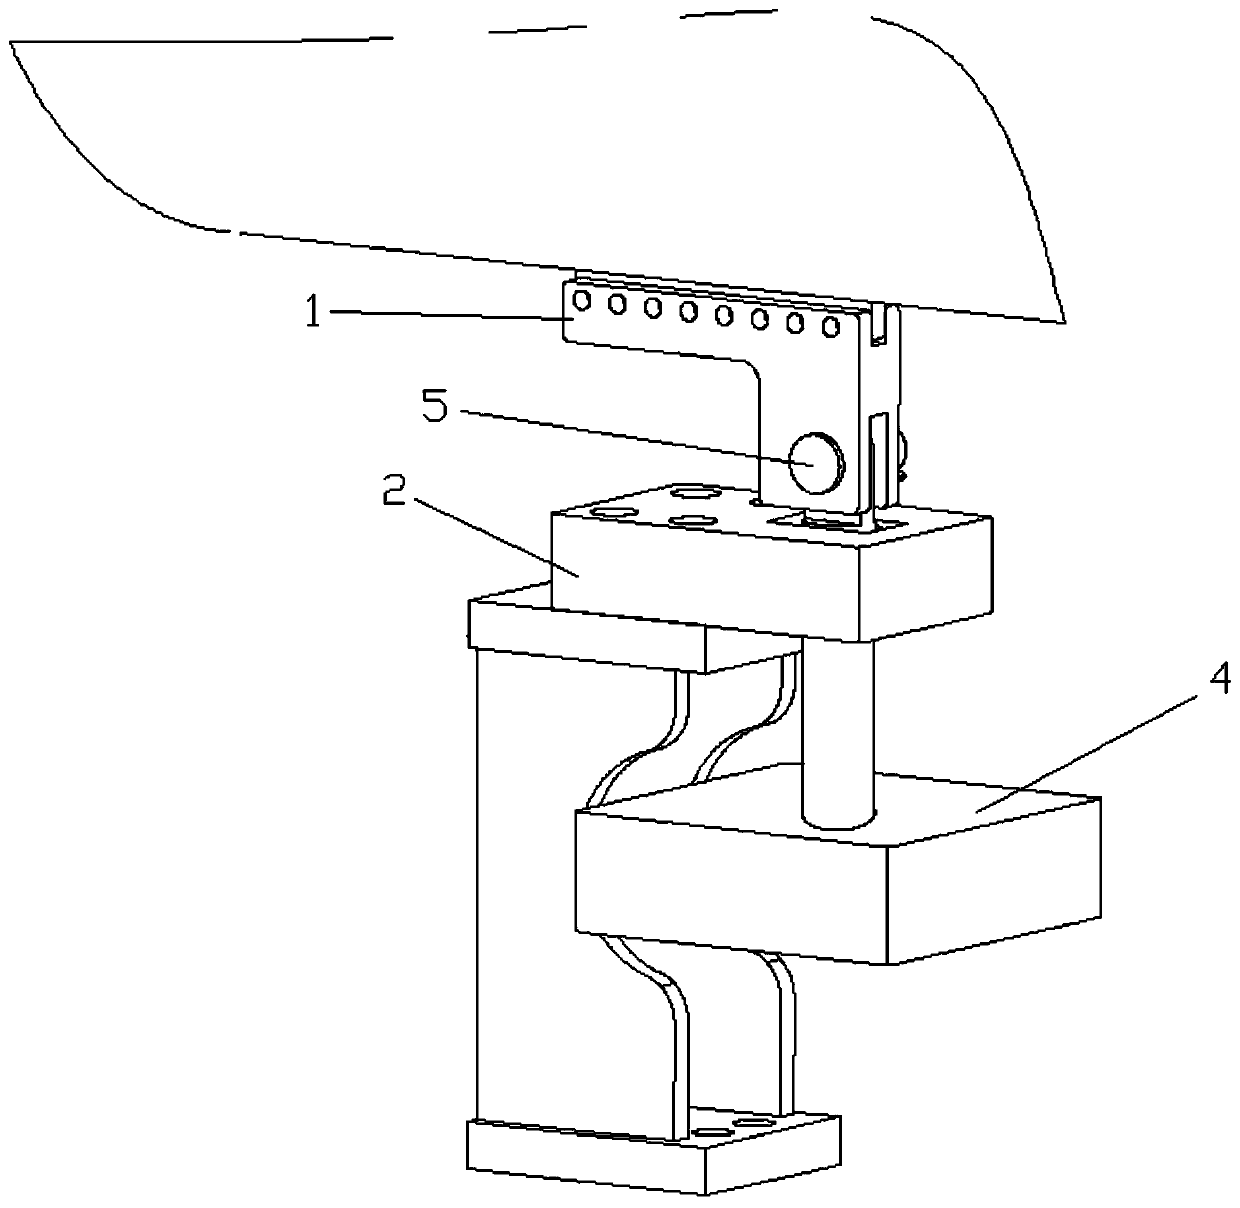 An axial anti-shock device